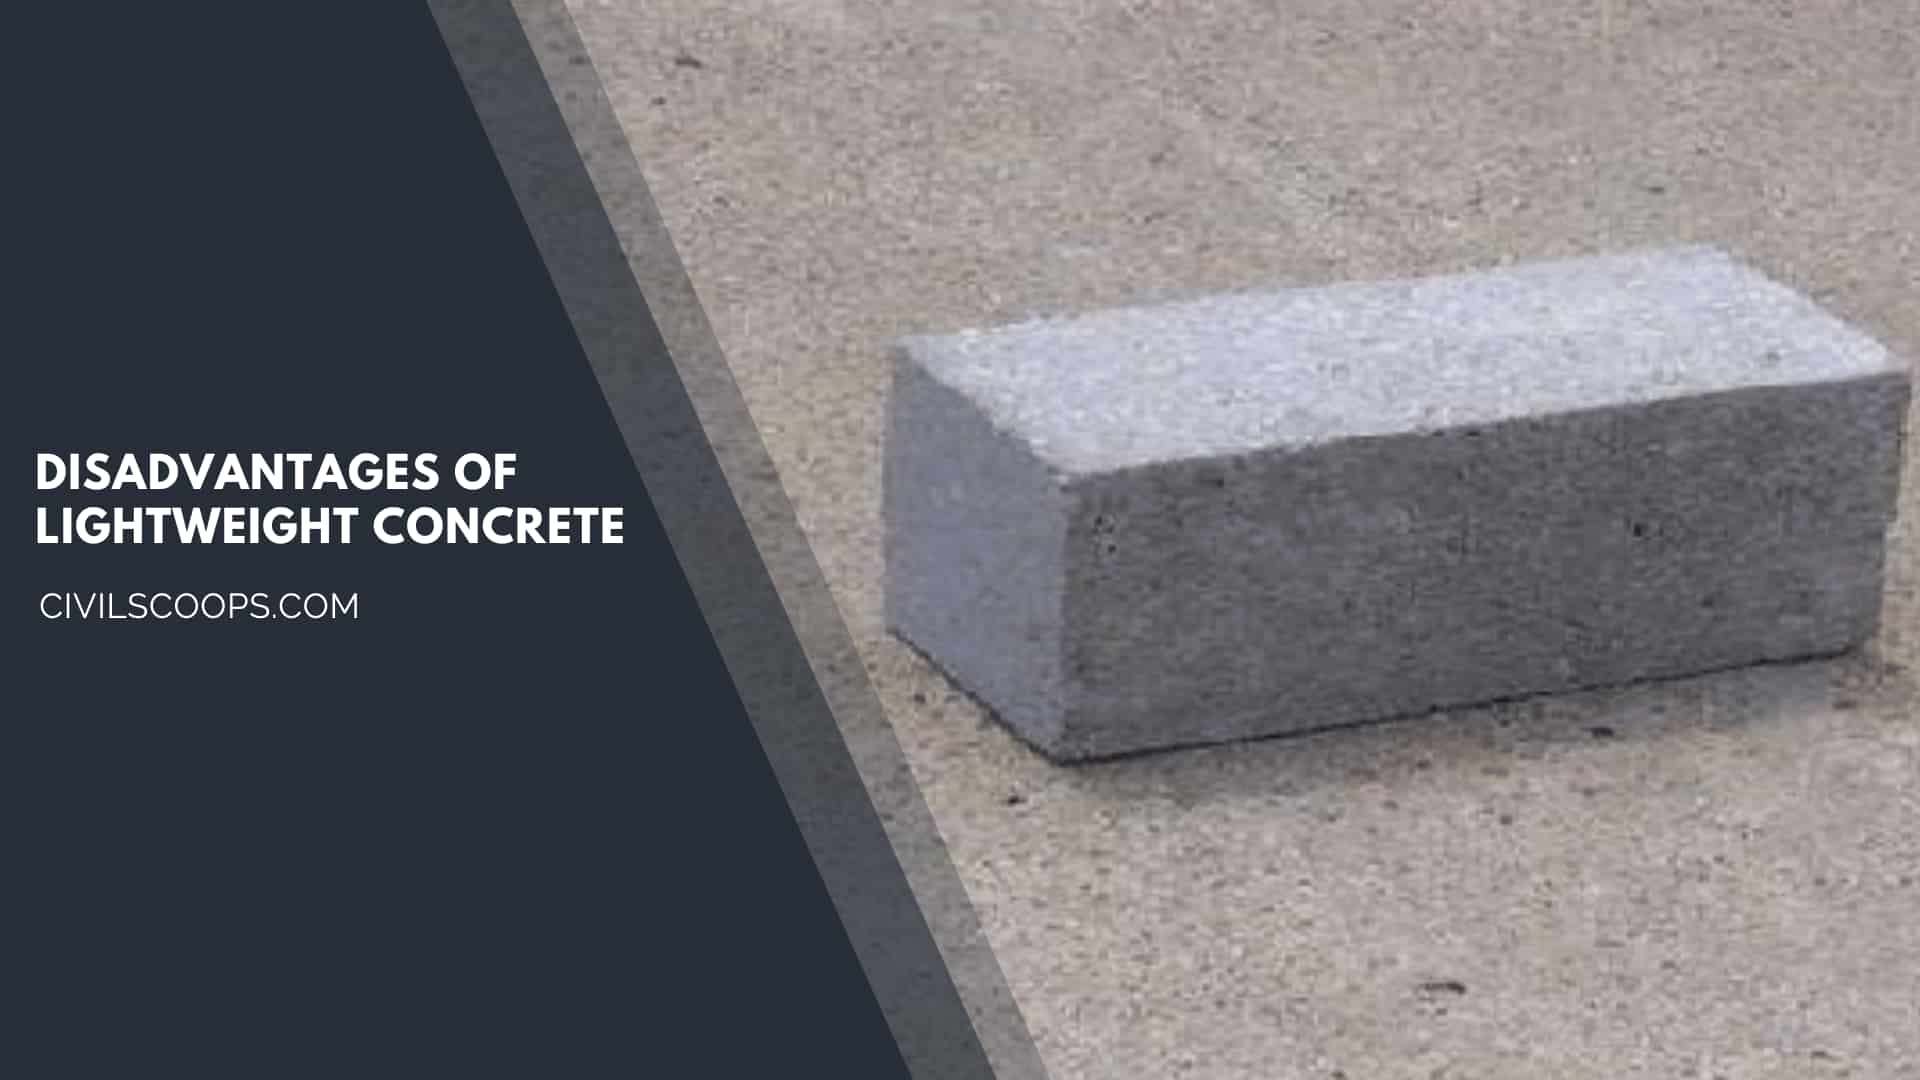 Disadvantages of Lightweight Concrete